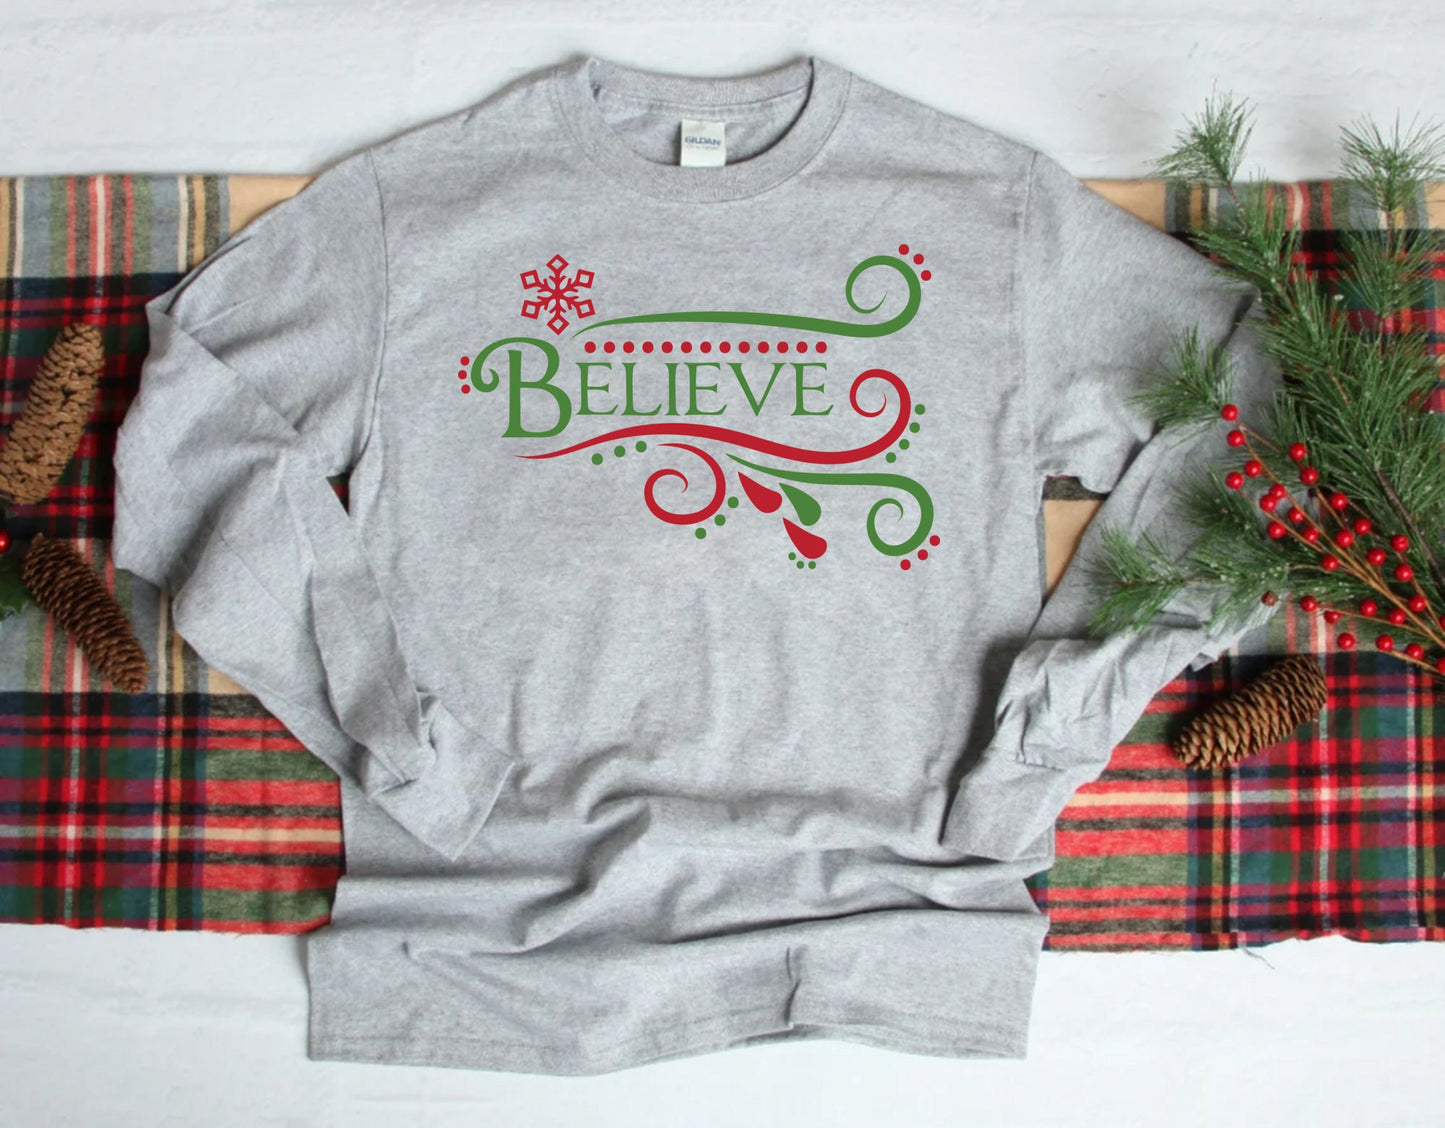 Believe Long Sleeve Shirt, Christmas Shirts, Holiday Shirts, Winter Shirts, Inspirational Shirts, Family Christmas Shirts